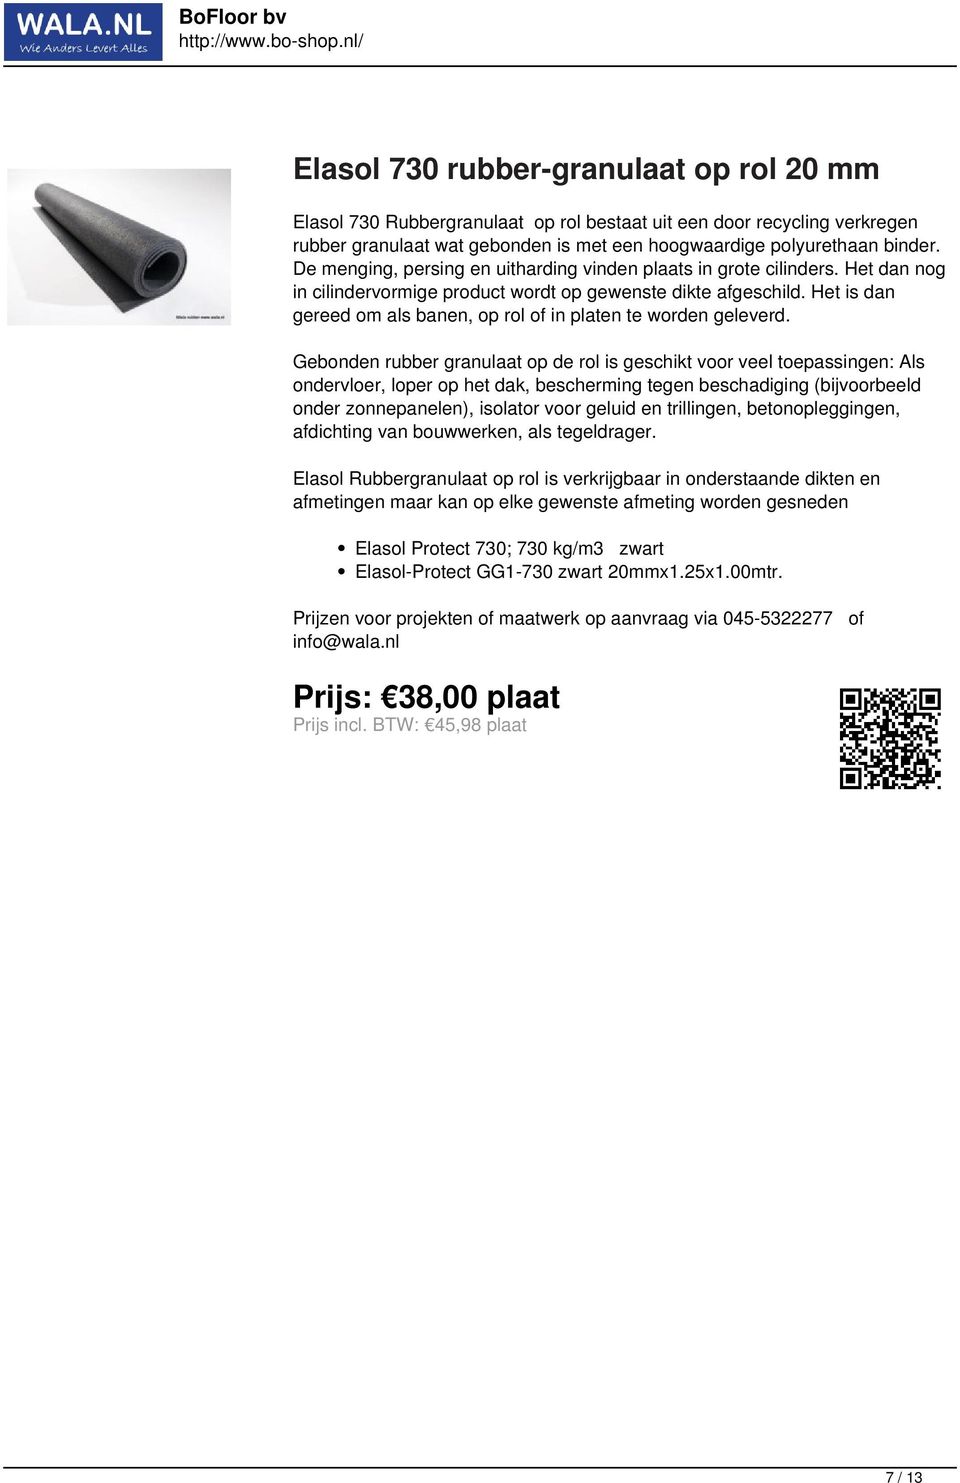 Elasol Protect 730; 730 kg/m3 zwart Elasol-Protect GG1-730